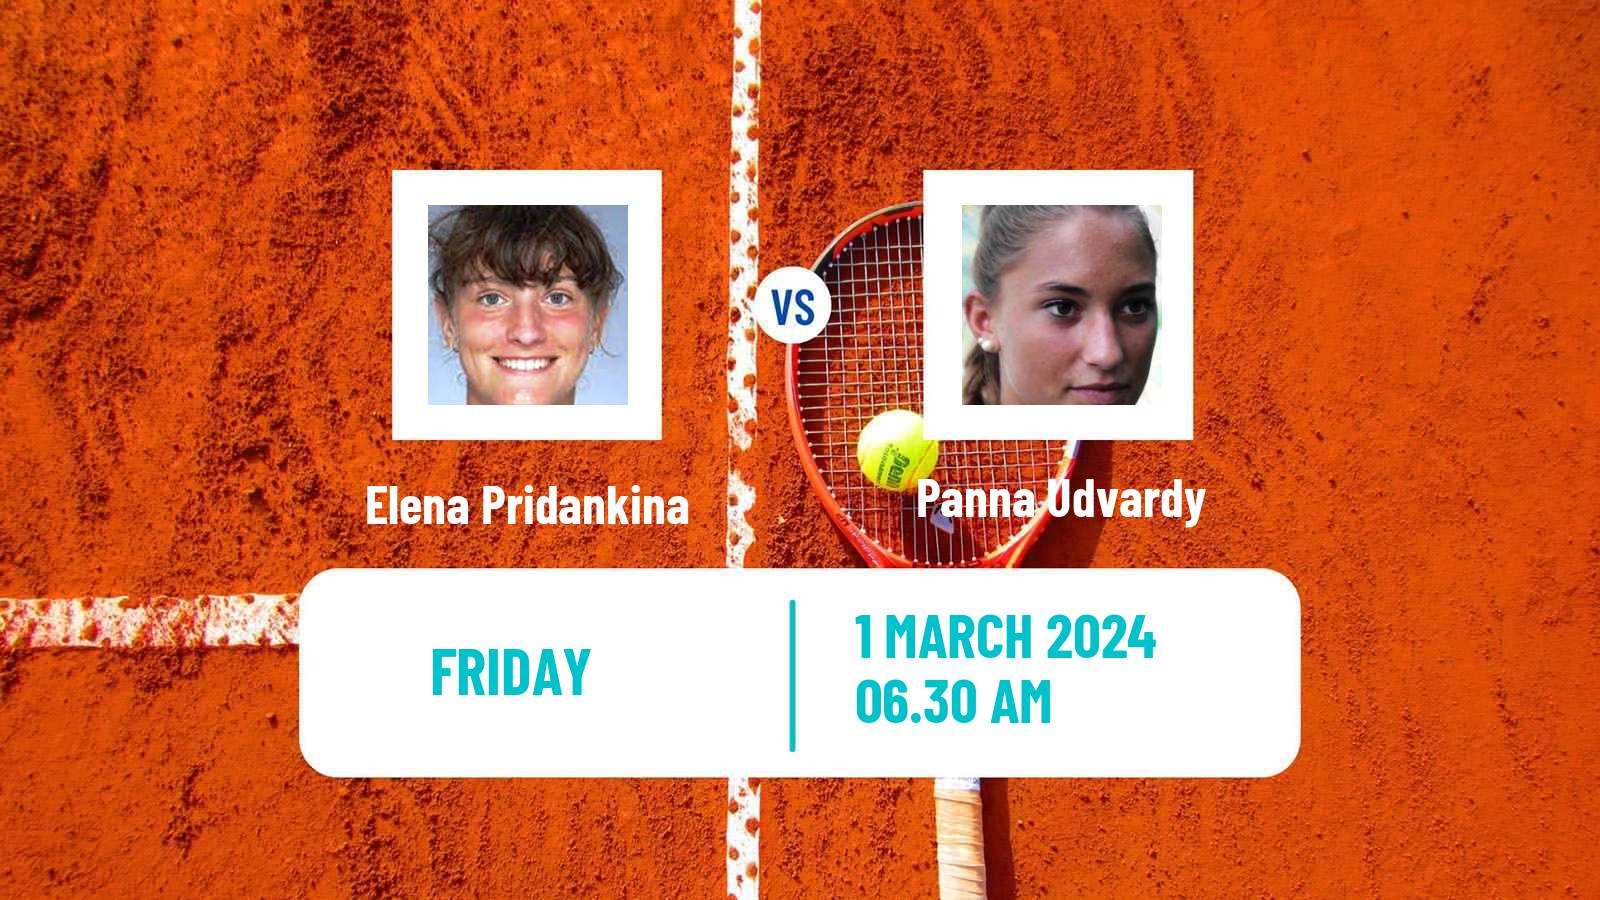 Tennis ITF W50 Trnava Women Elena Pridankina - Panna Udvardy